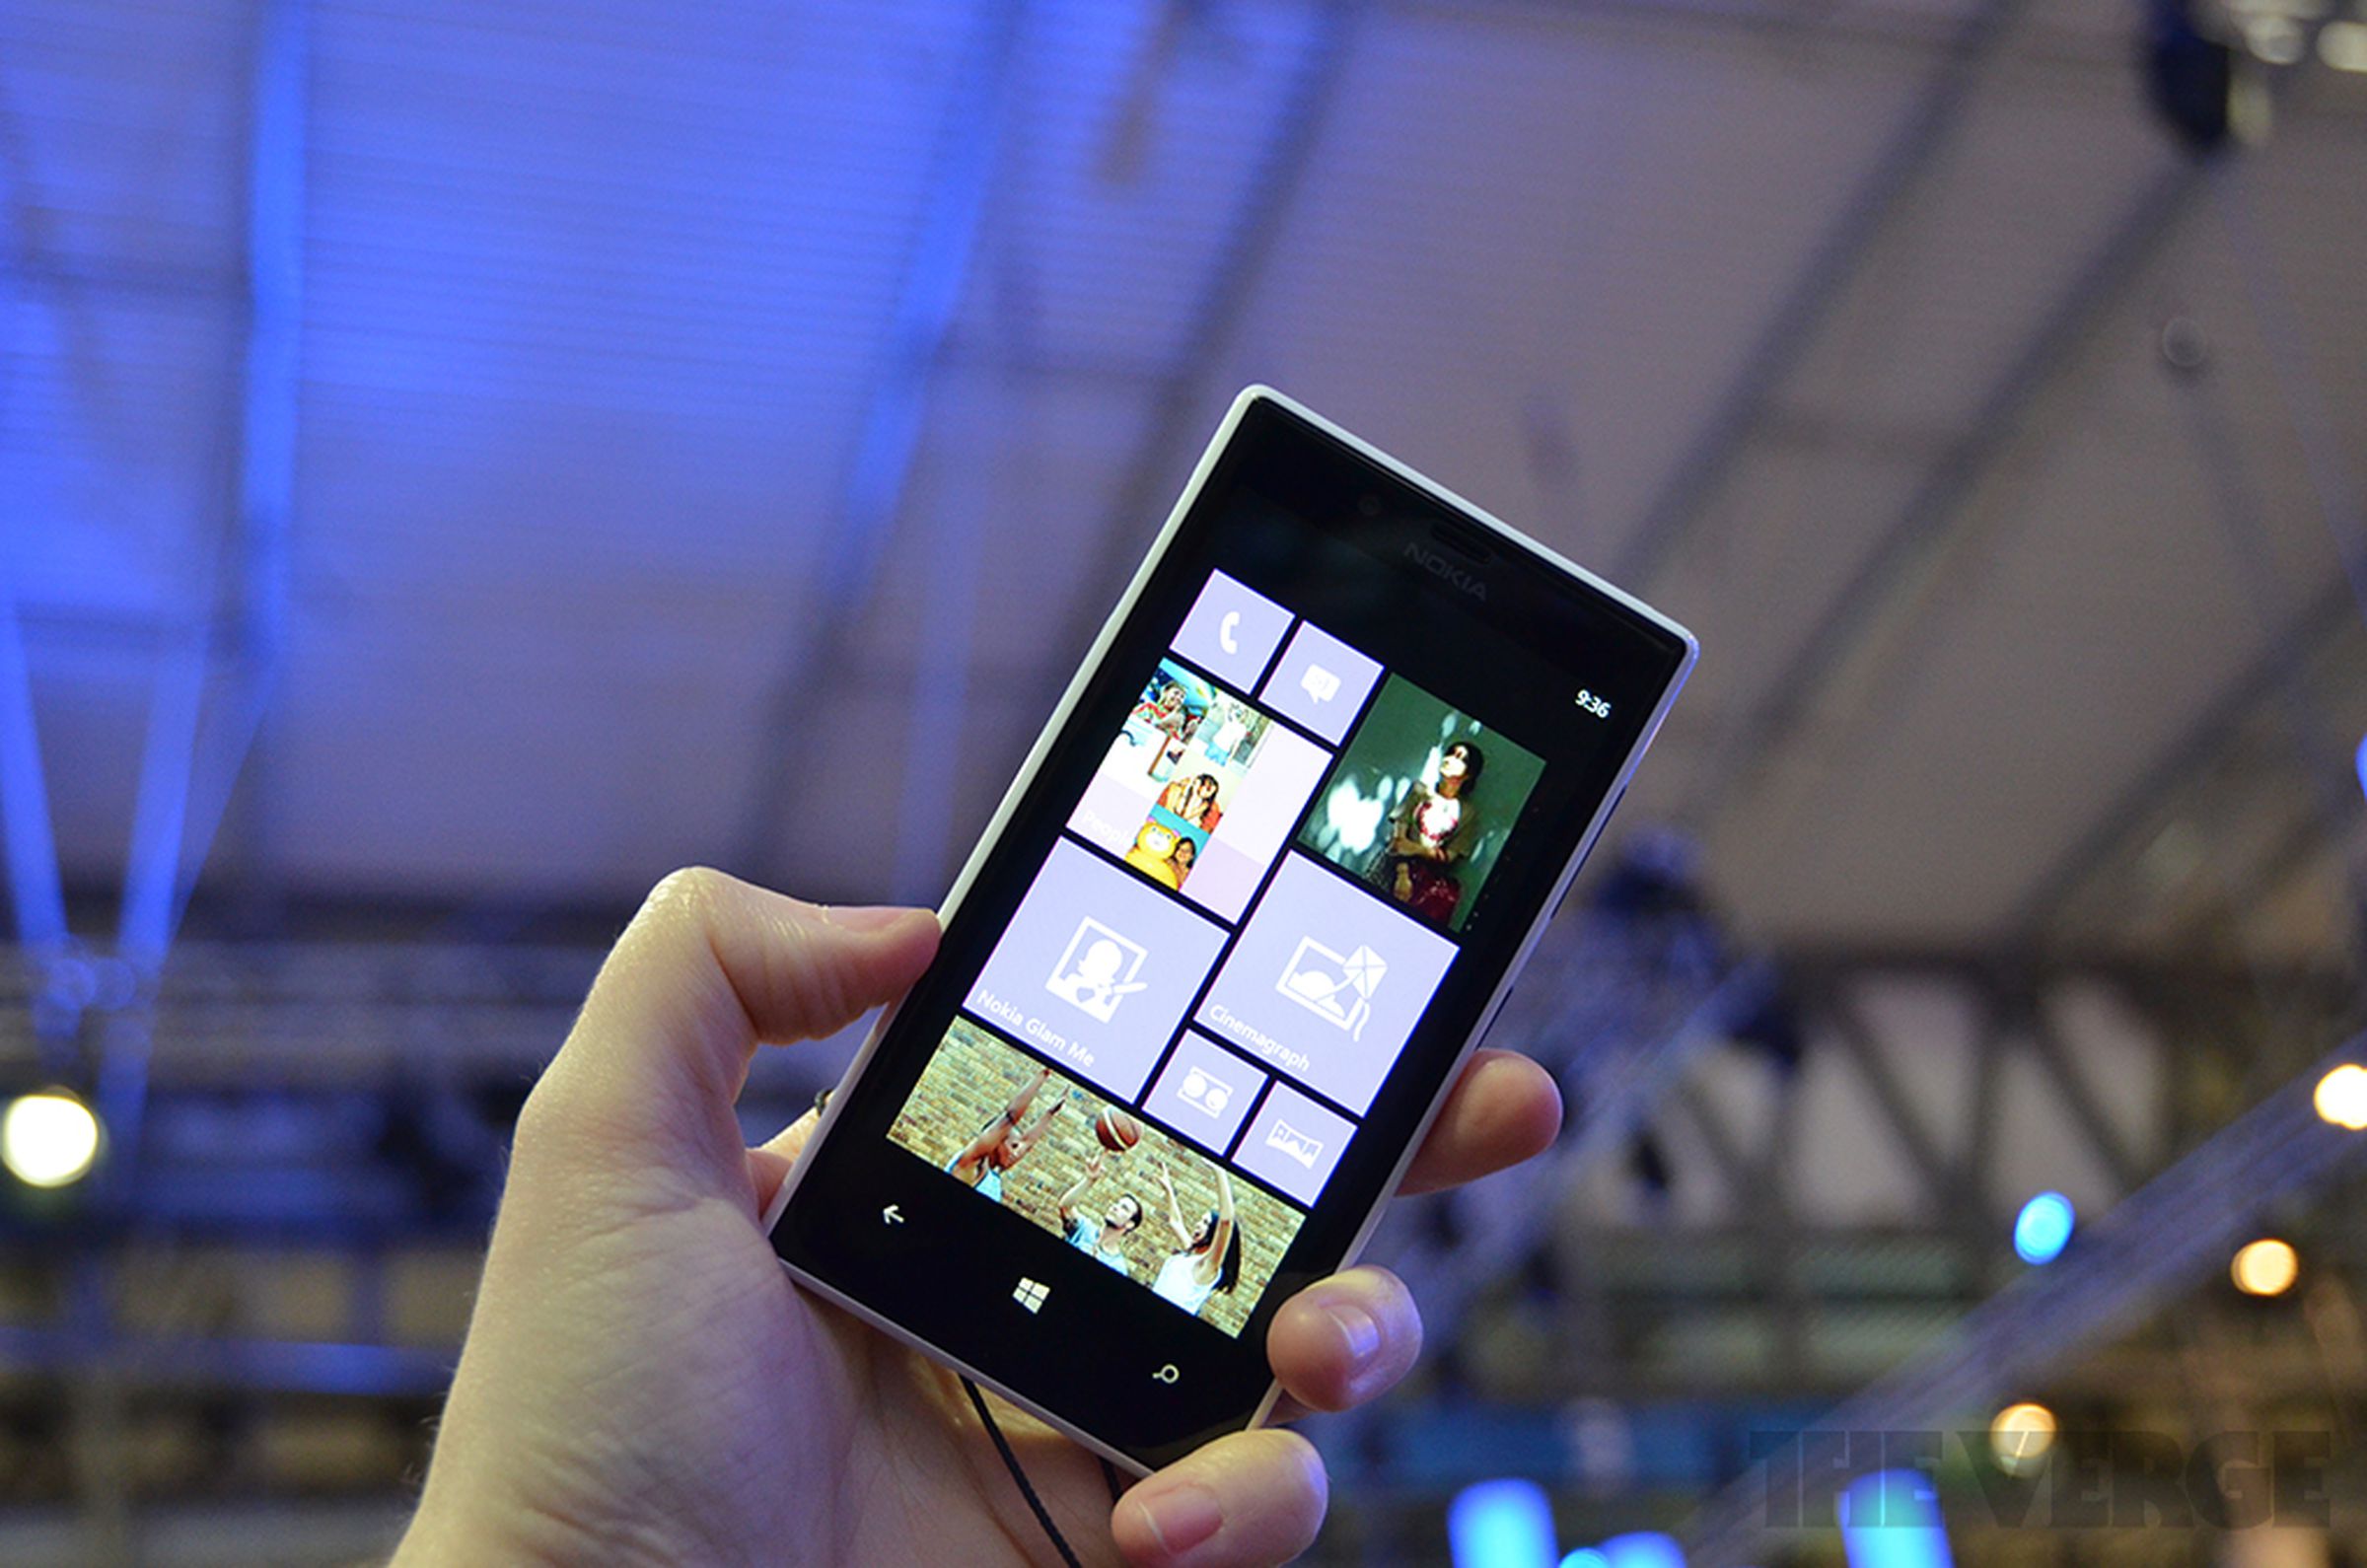 Nokia Lumia 720 hands-on photos